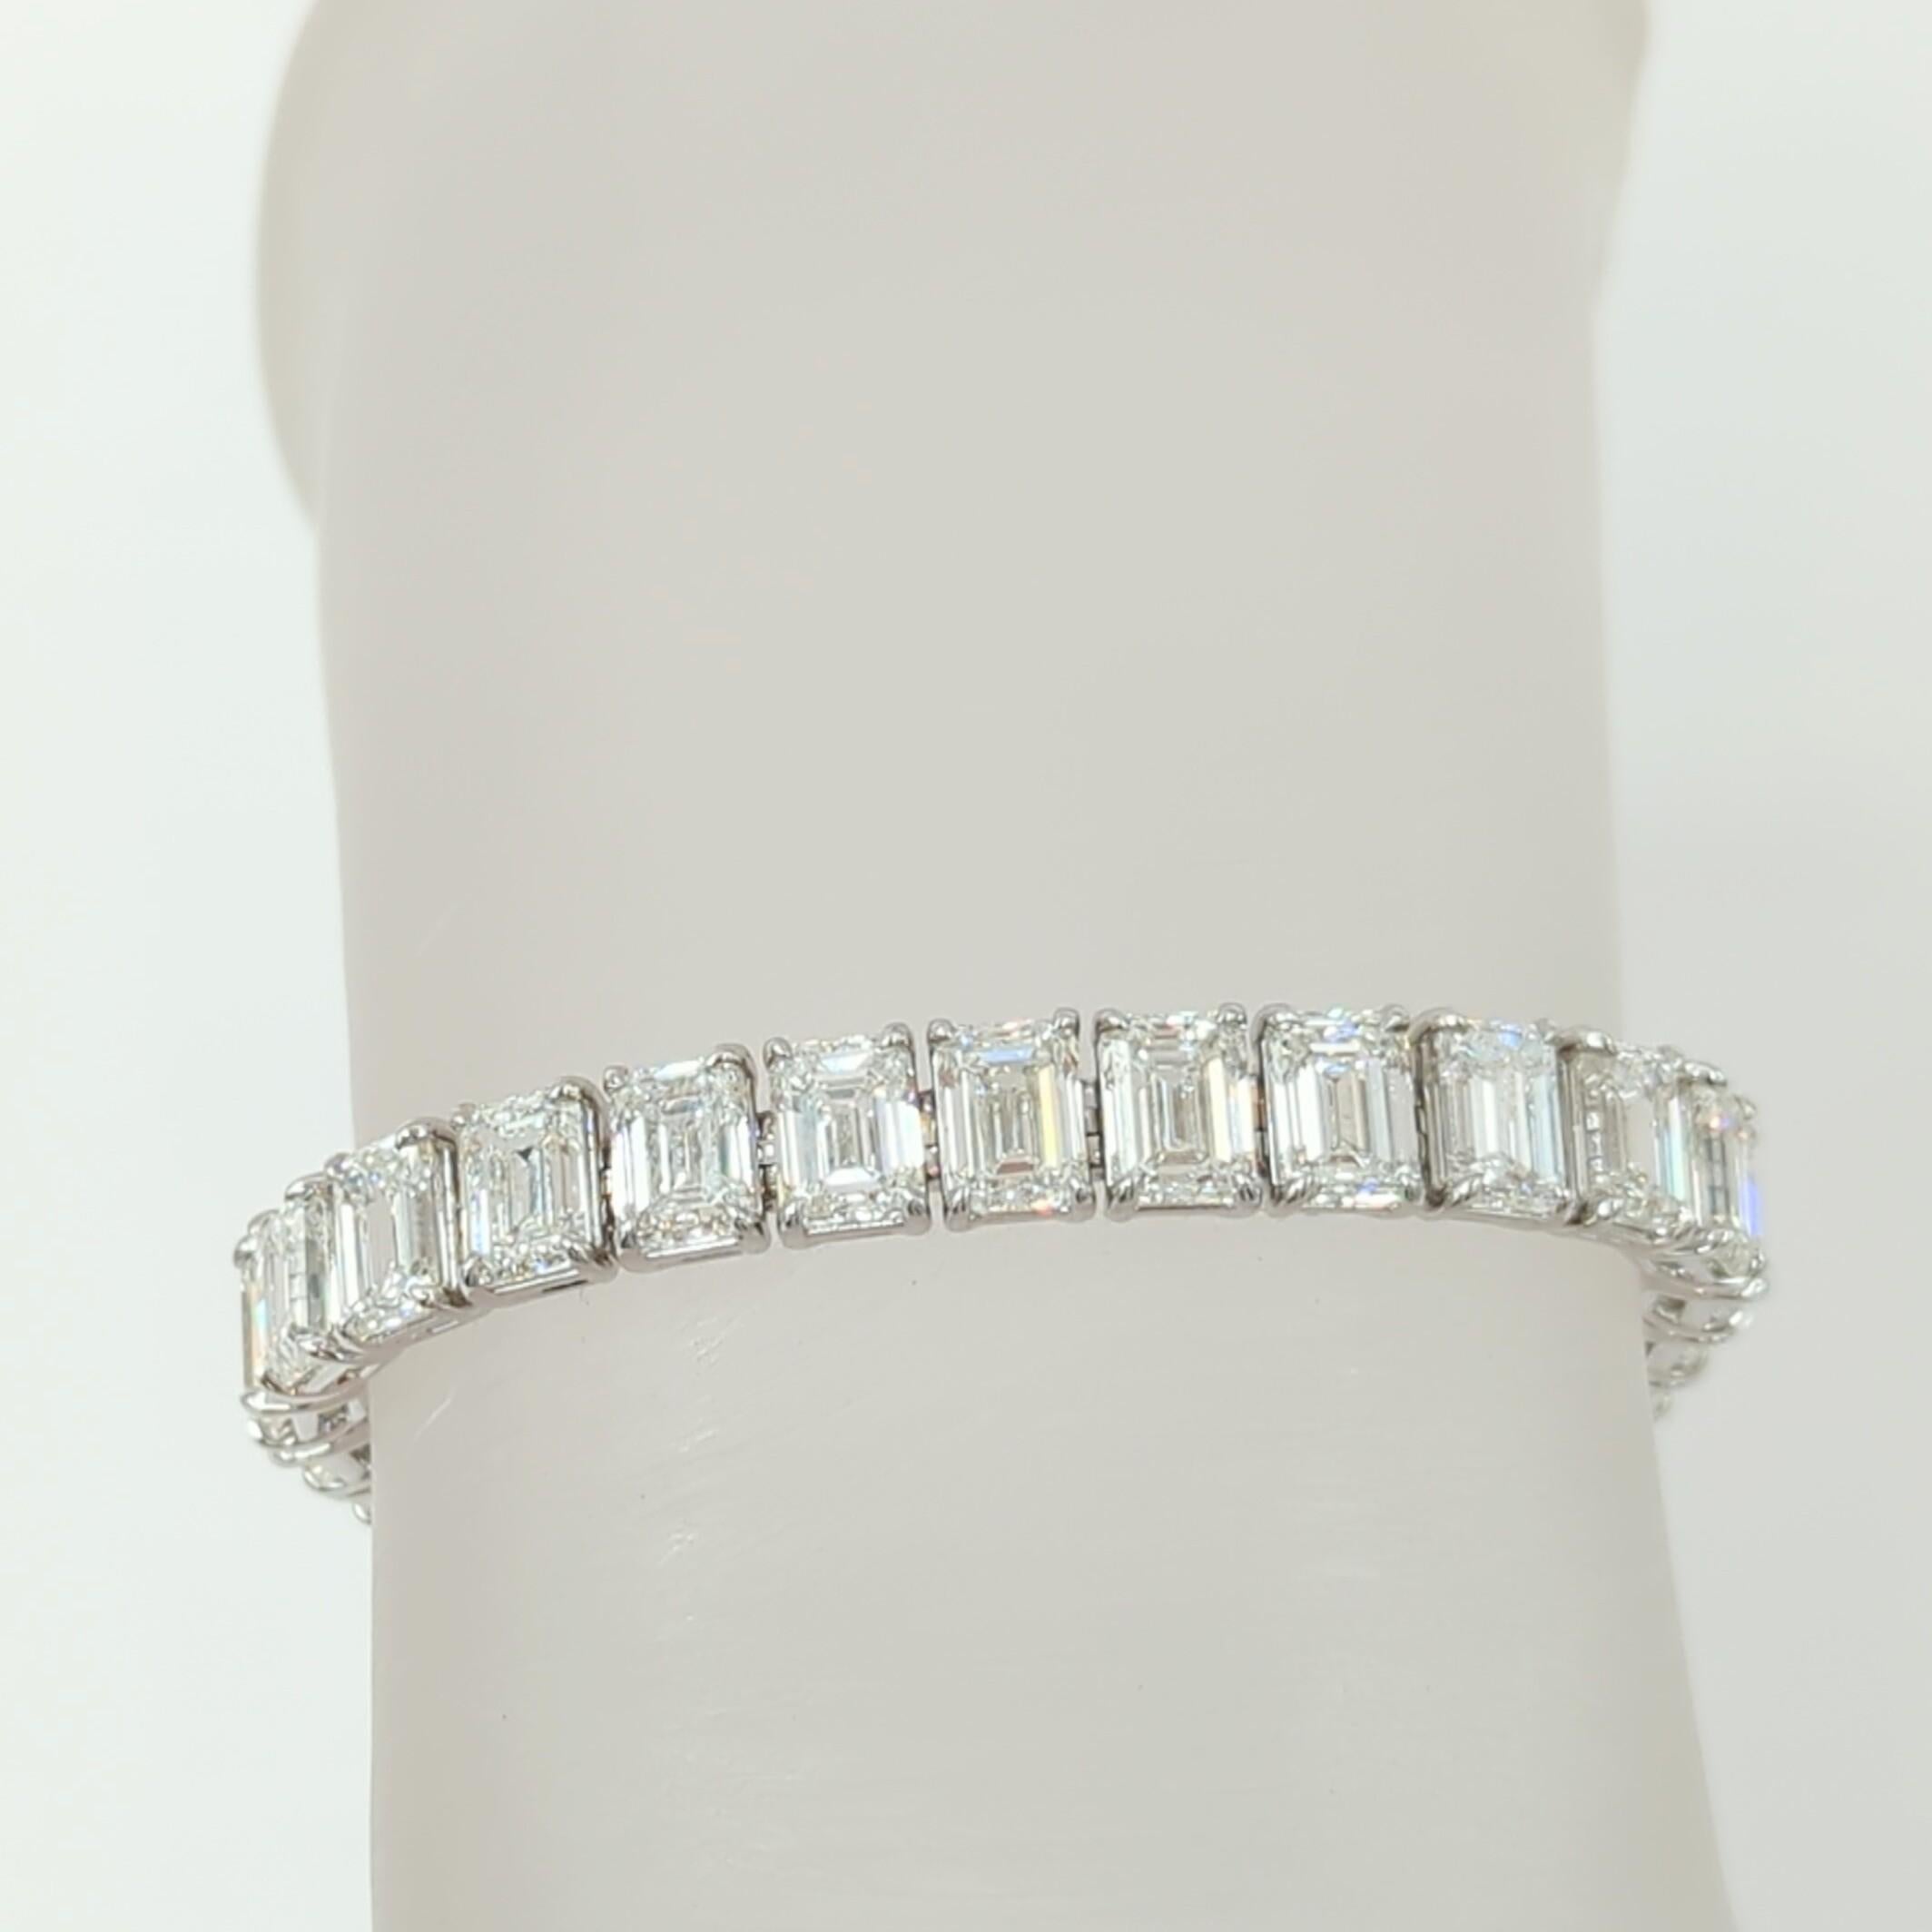 GIA 1 Carat Each Emerald Cut White Diamond Tennis Bracelet in 18K White Gold For Sale 1